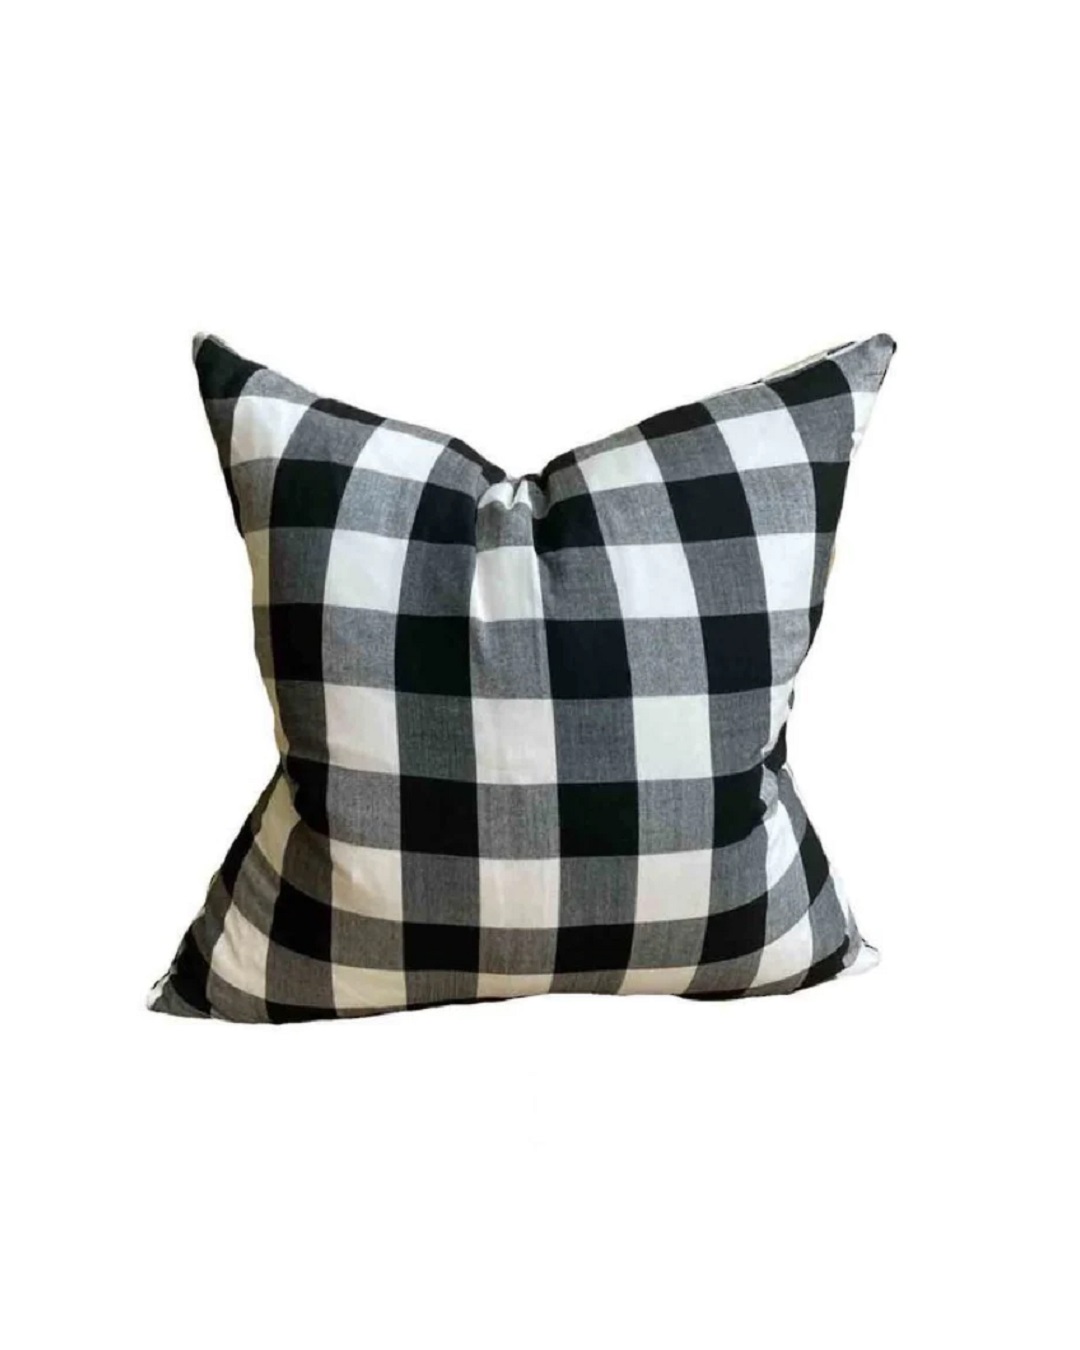 Black and white plaid cushion